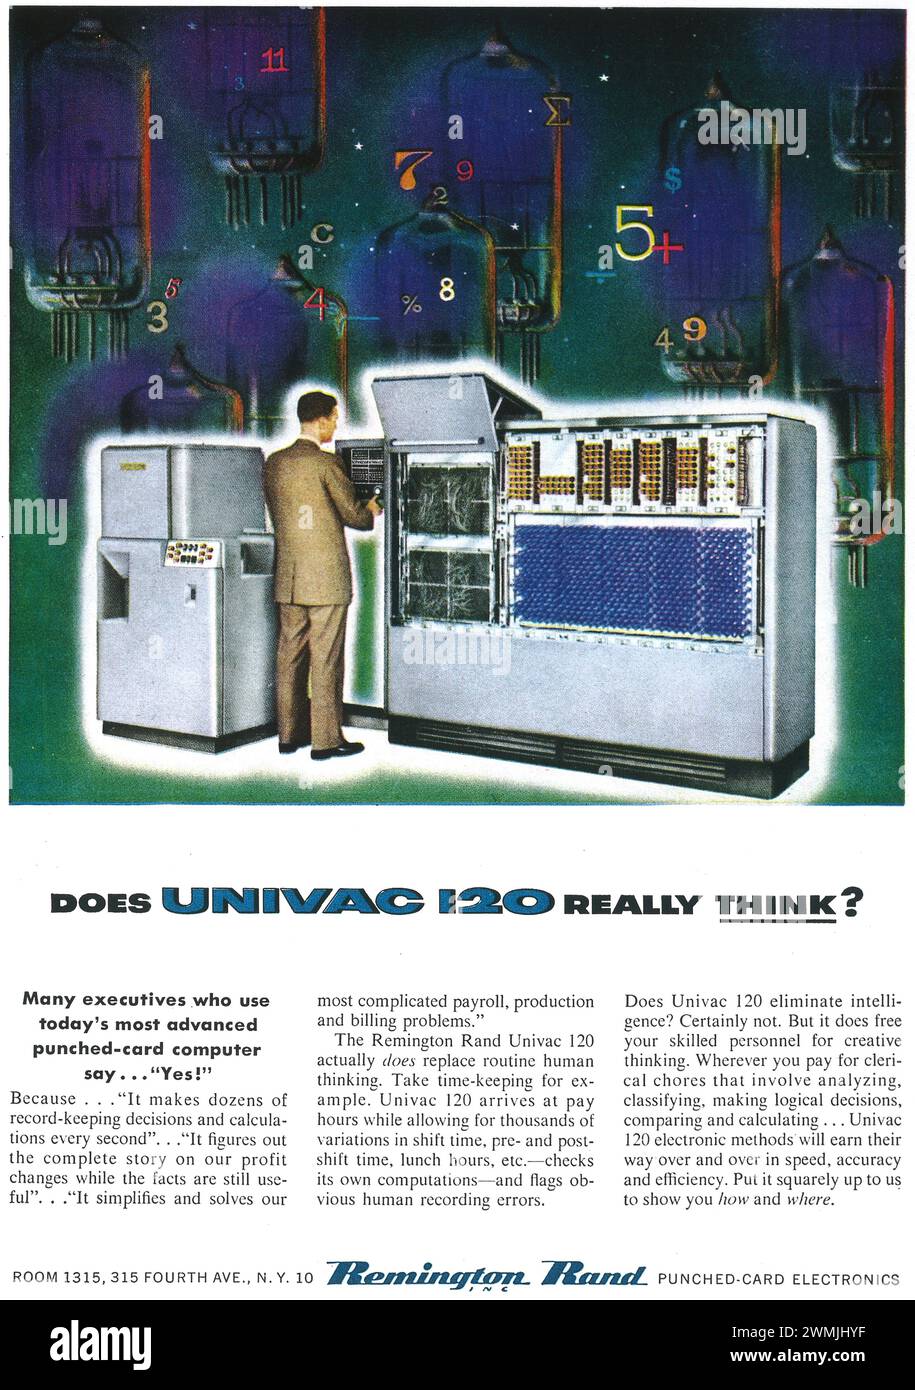 1953 Remington Rand Univac 120 Computer Print Ad. Does UNIVAC 120 really think? Stock Photo